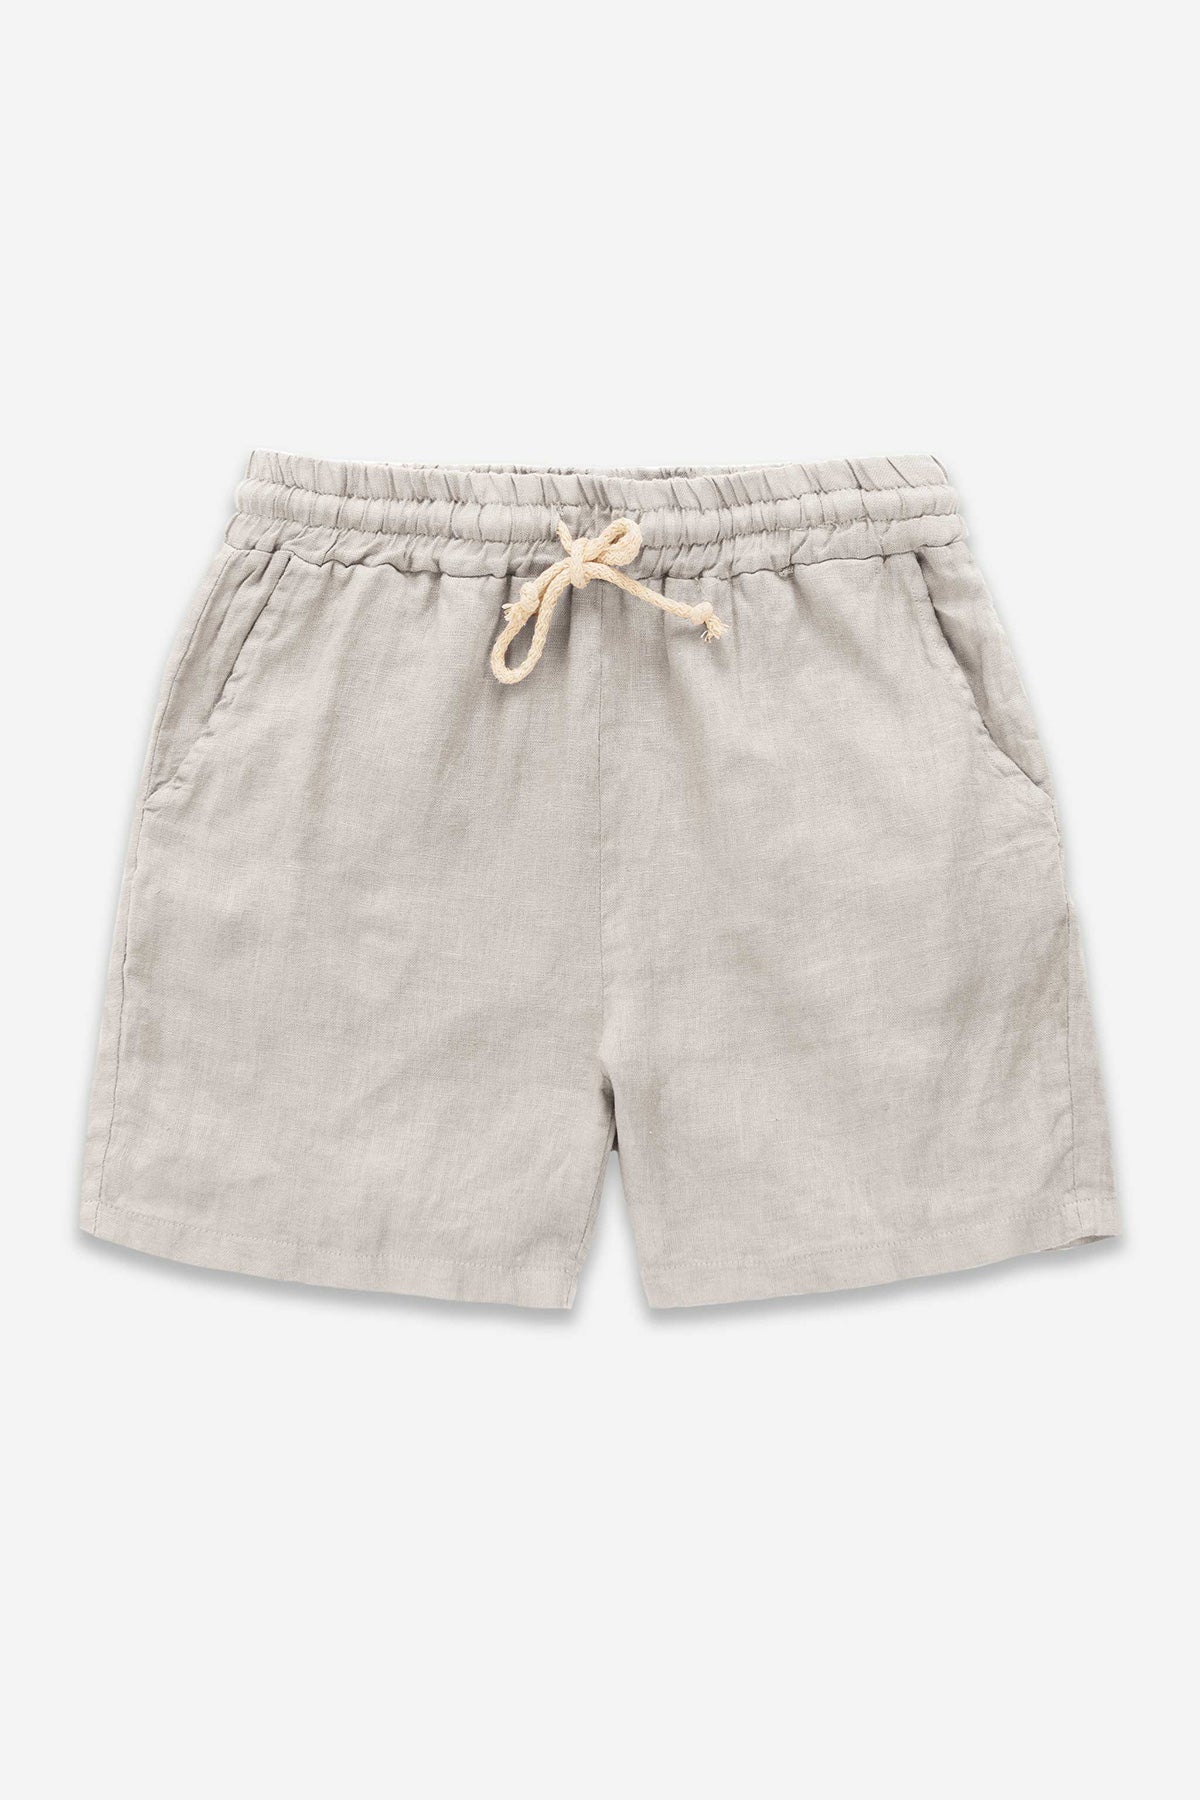 MEN'S LINEN SHORTS, Linen Shorts Men, Basic Shorts, Natural Linen Shorts,  Shorts for Men, Short Shorts, Beach Shorts, Organic Flax Shorts -   Canada